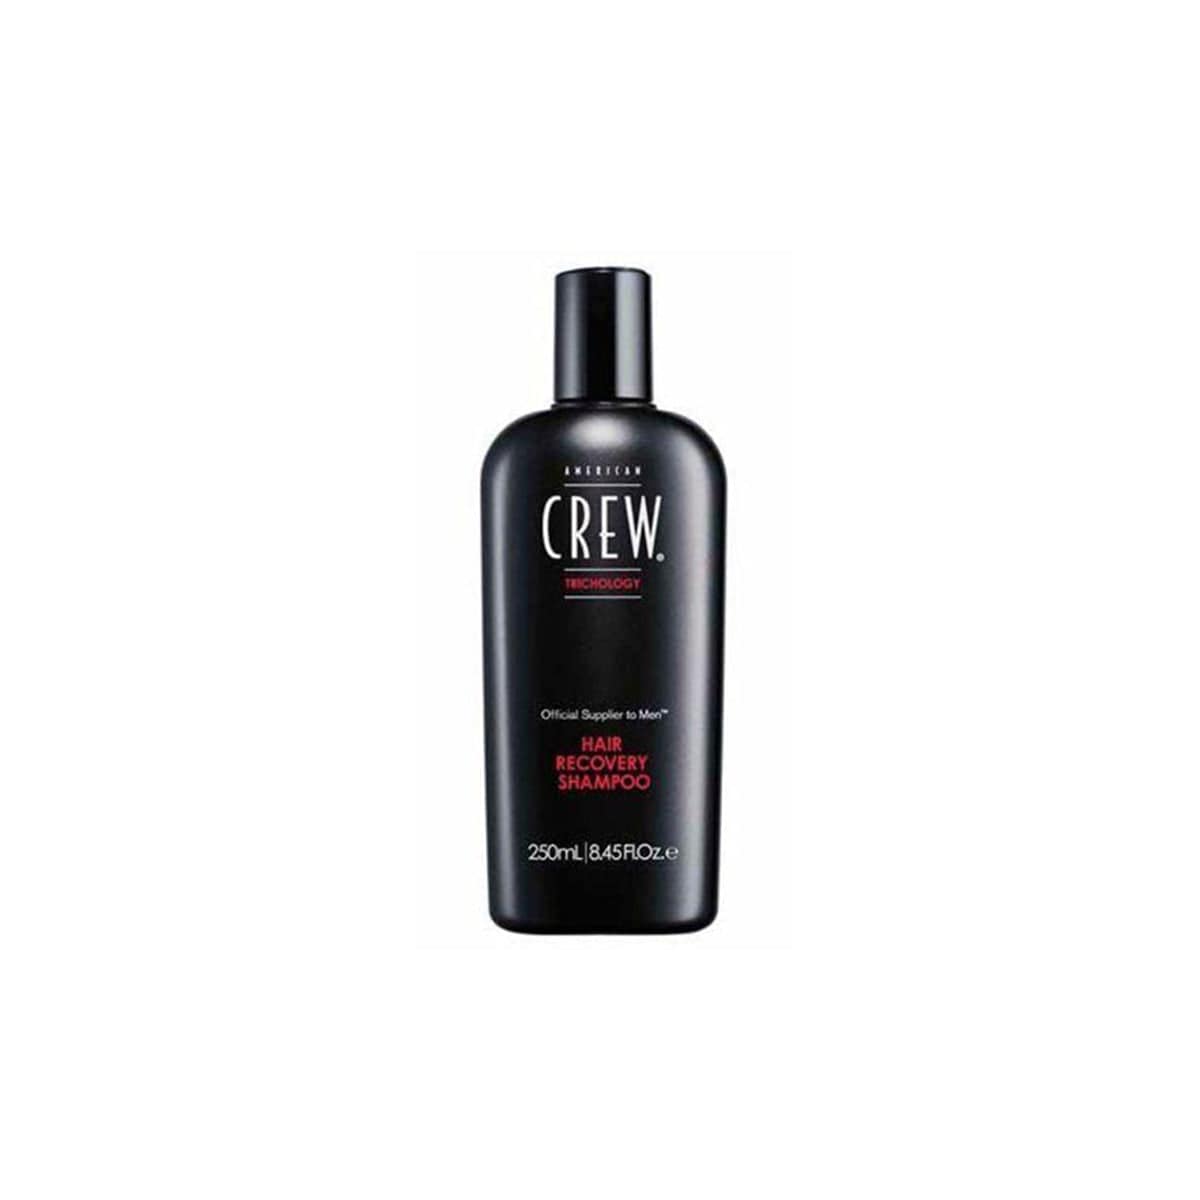 AMERICAN CREW_Trichology Hair Recovery Shampoo 250ml / 8.45oz_Cosmetic World